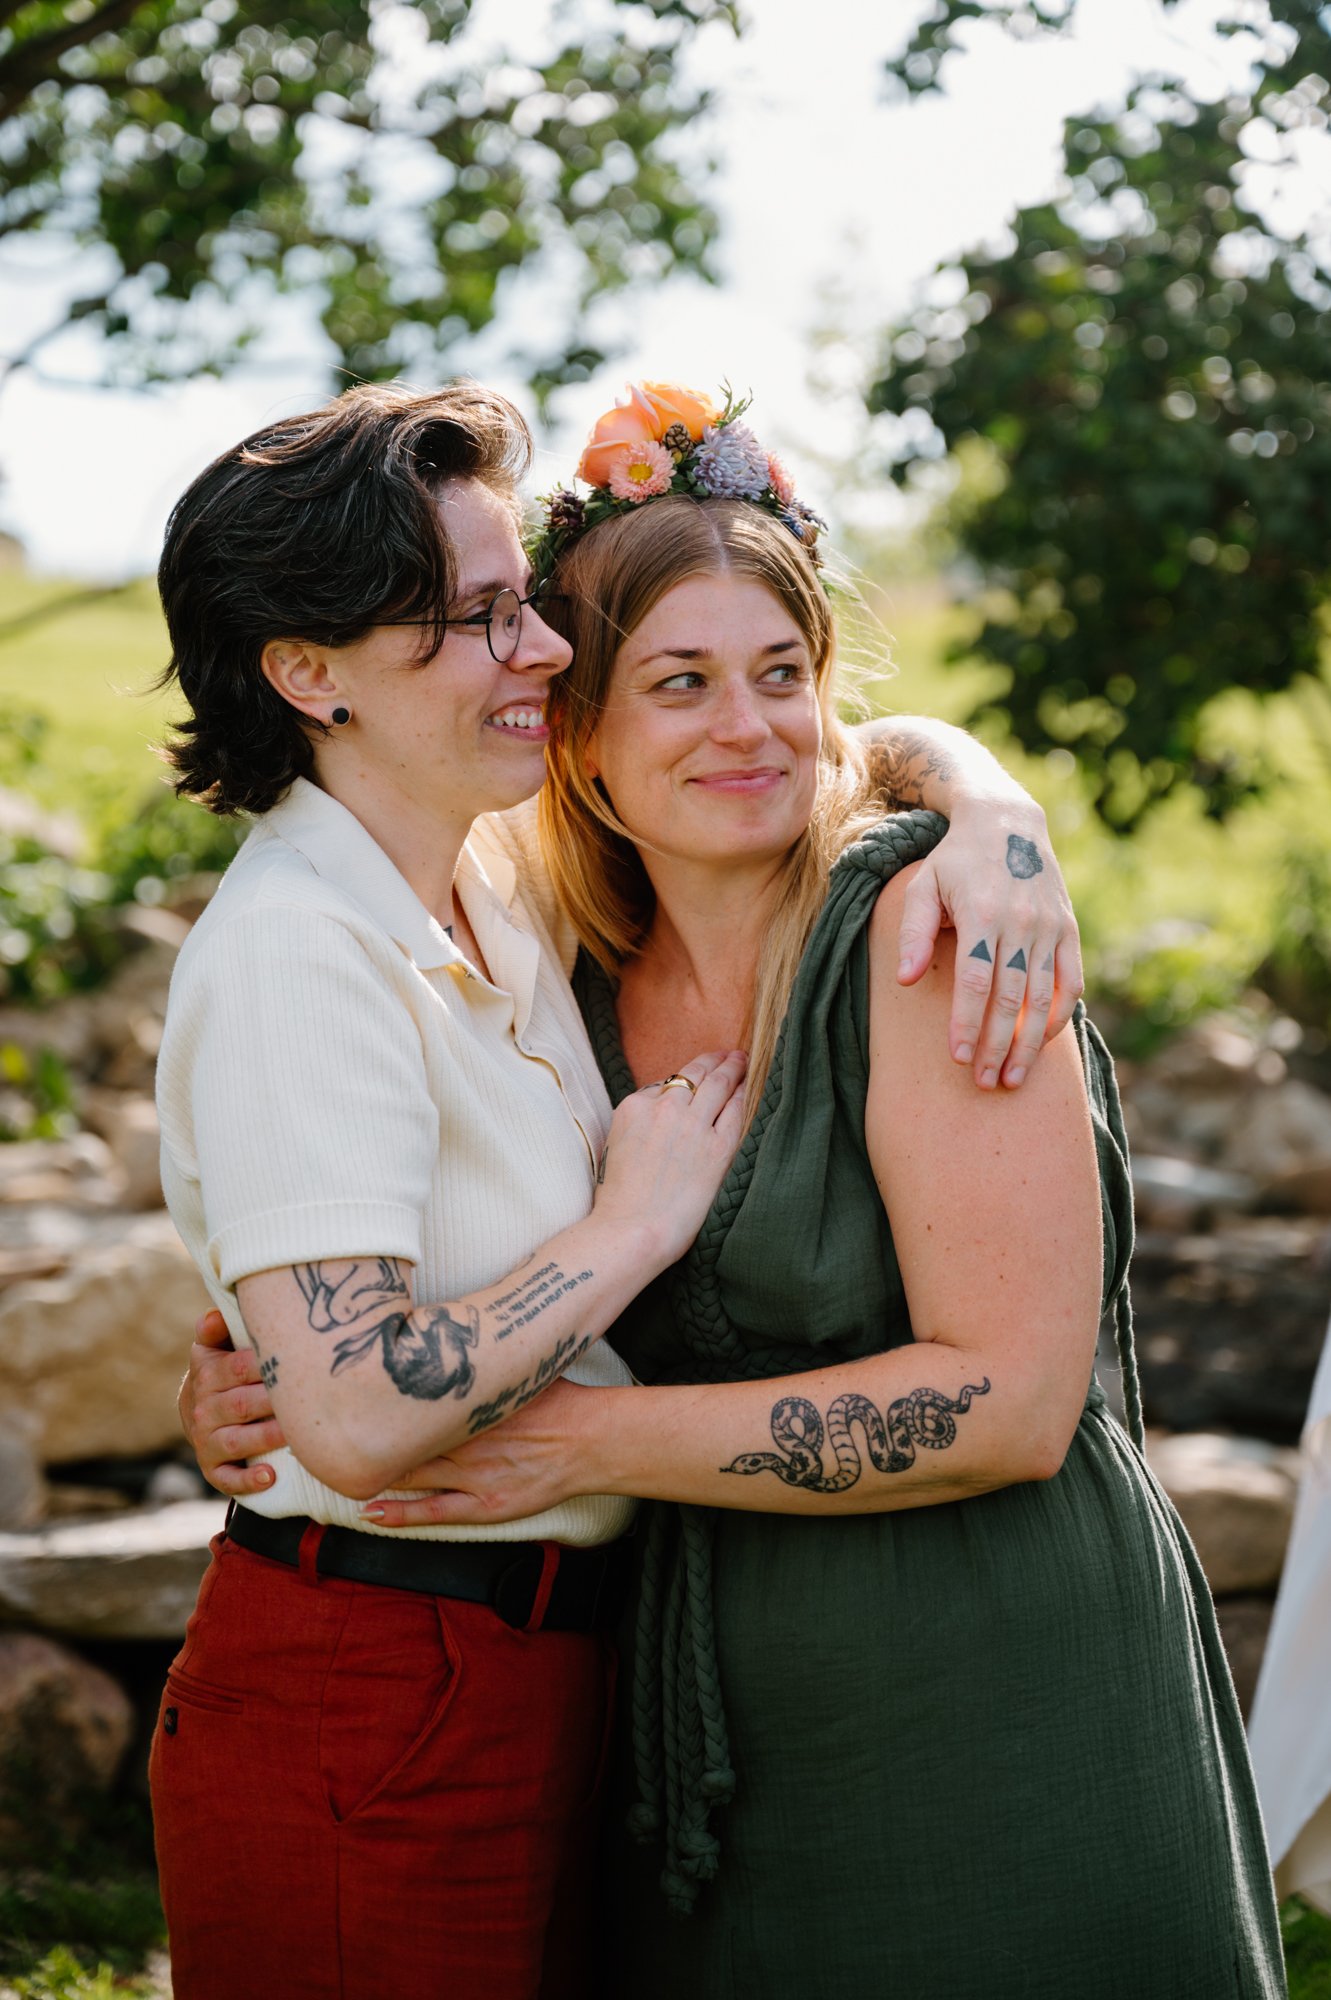 Rosewood-Studios-Bela-Farm-LGBTQ-Wedding-Queer-Inspiration-Documentary-Candid-Photography-41.jpg